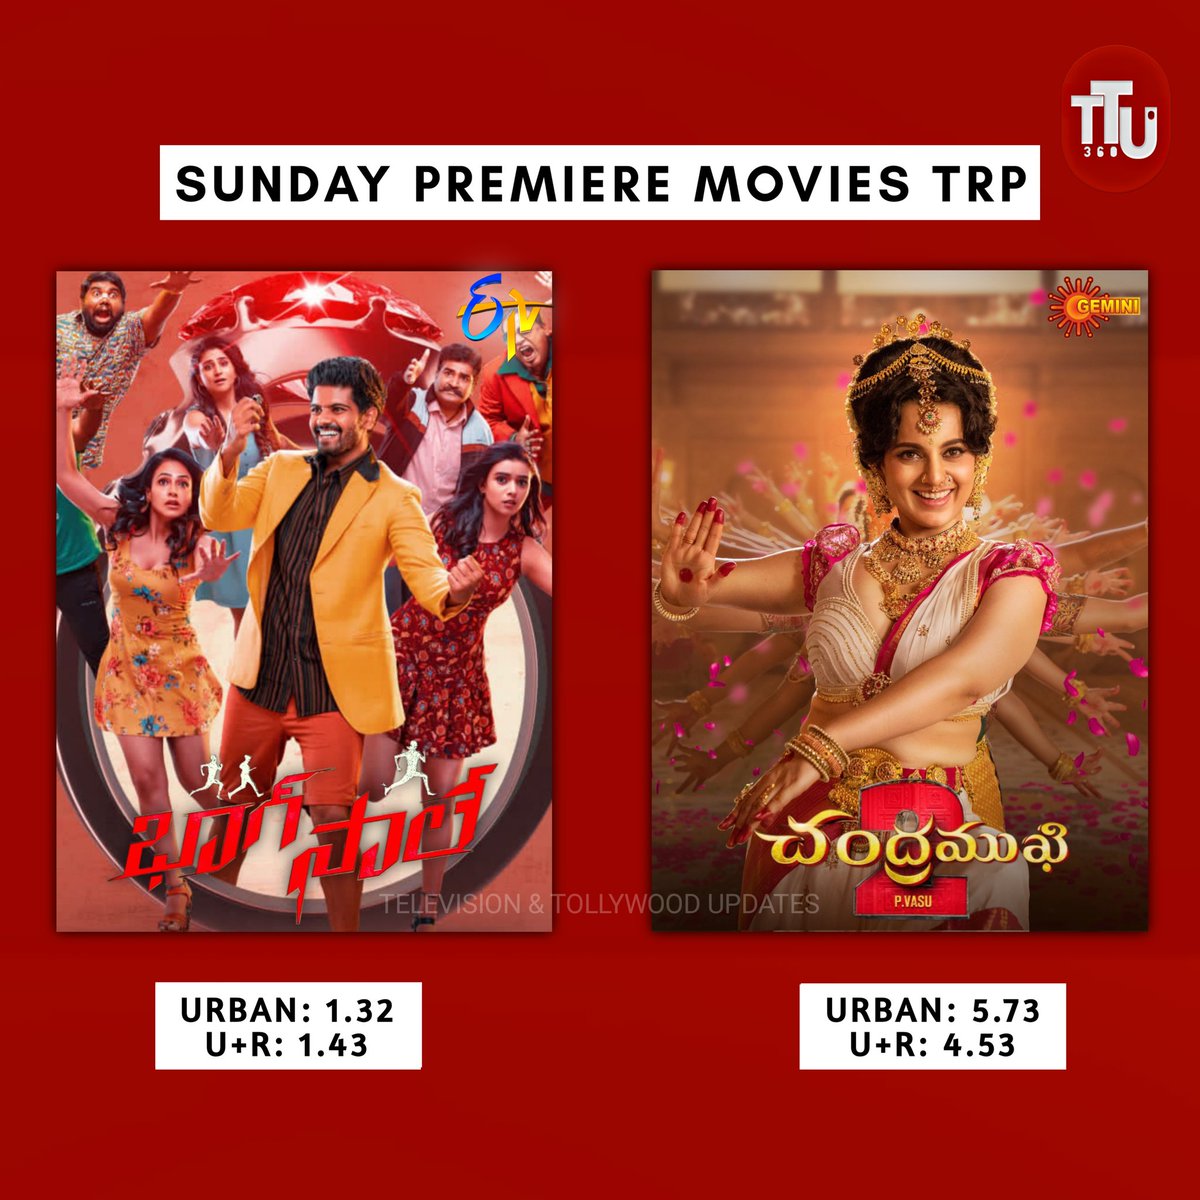 Sunday premiere movies TRP

#BhaagSaale #SimhaKoduri  #Pranith #KaalaBhairava  #NehaSolanki  #arjundasyan  #YashBigBen #Chandramukhi2 
#PVasu #RaghavaLawrence #KanganaRanaut  #mmkeeravaani #EtvTelugu #GeminiTV